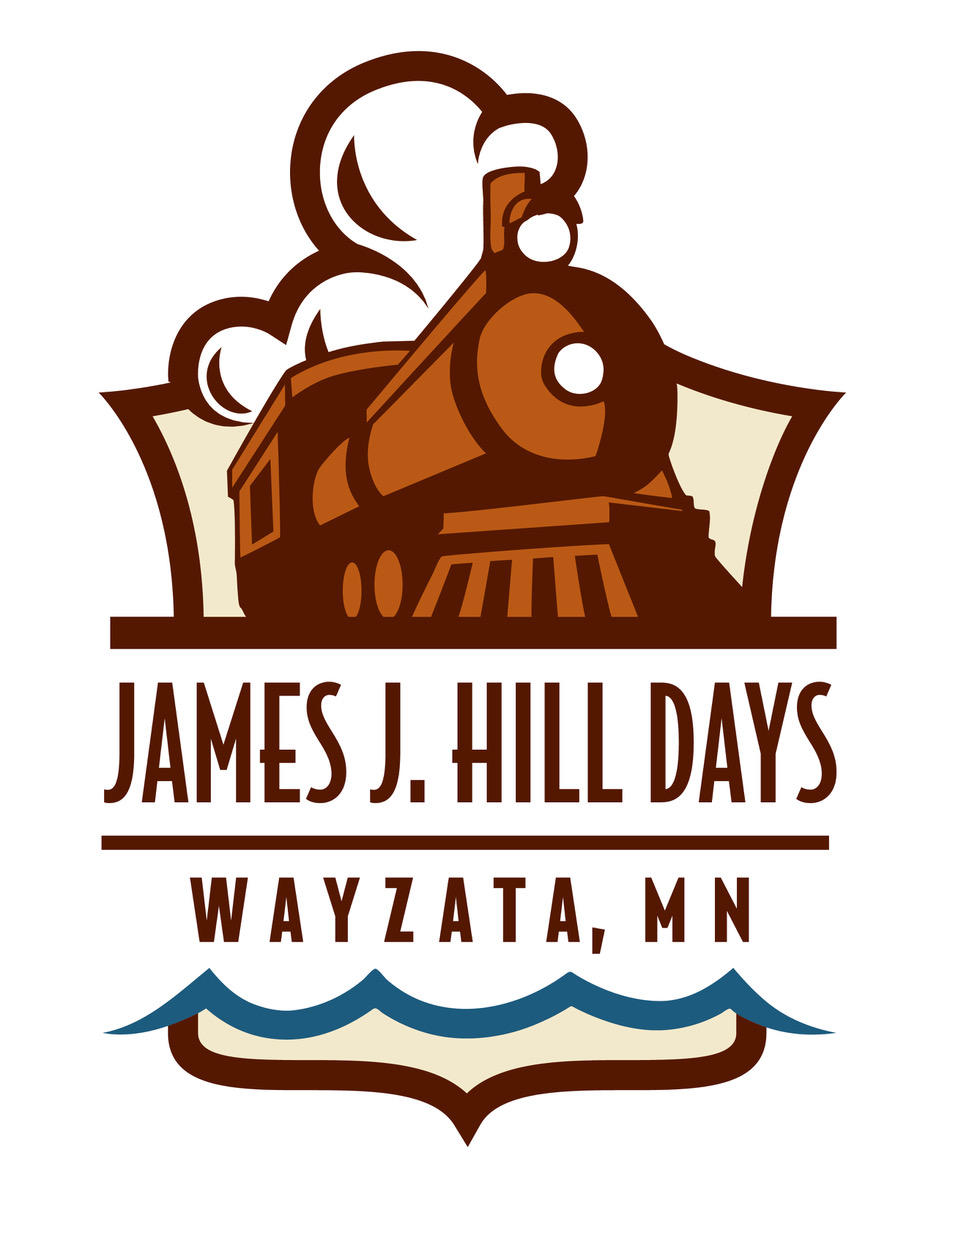 Volunteer At James J. Hill Days To Benefit The Wayzata Lake Effect!